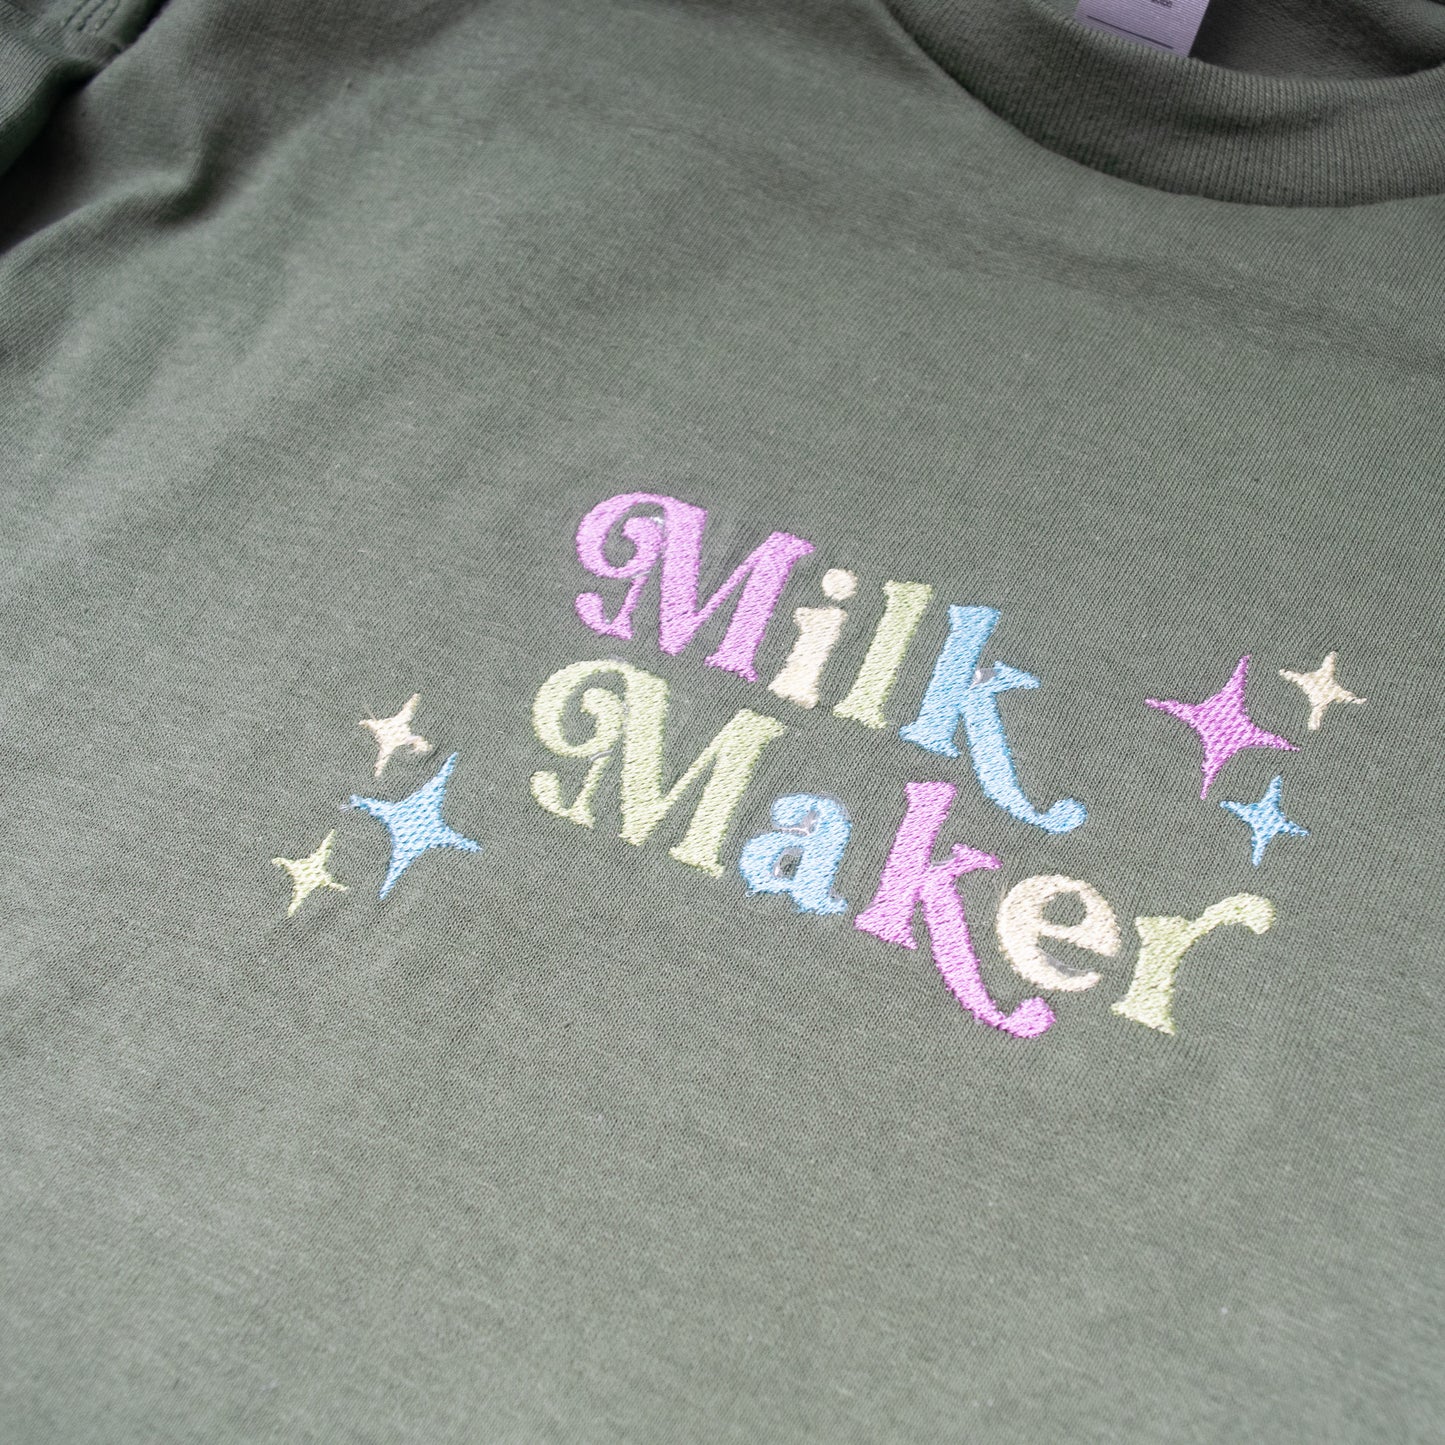 🌟 Empowerment Embroidered 'Milk Maker' Breastfeeding Awareness Top 🤱